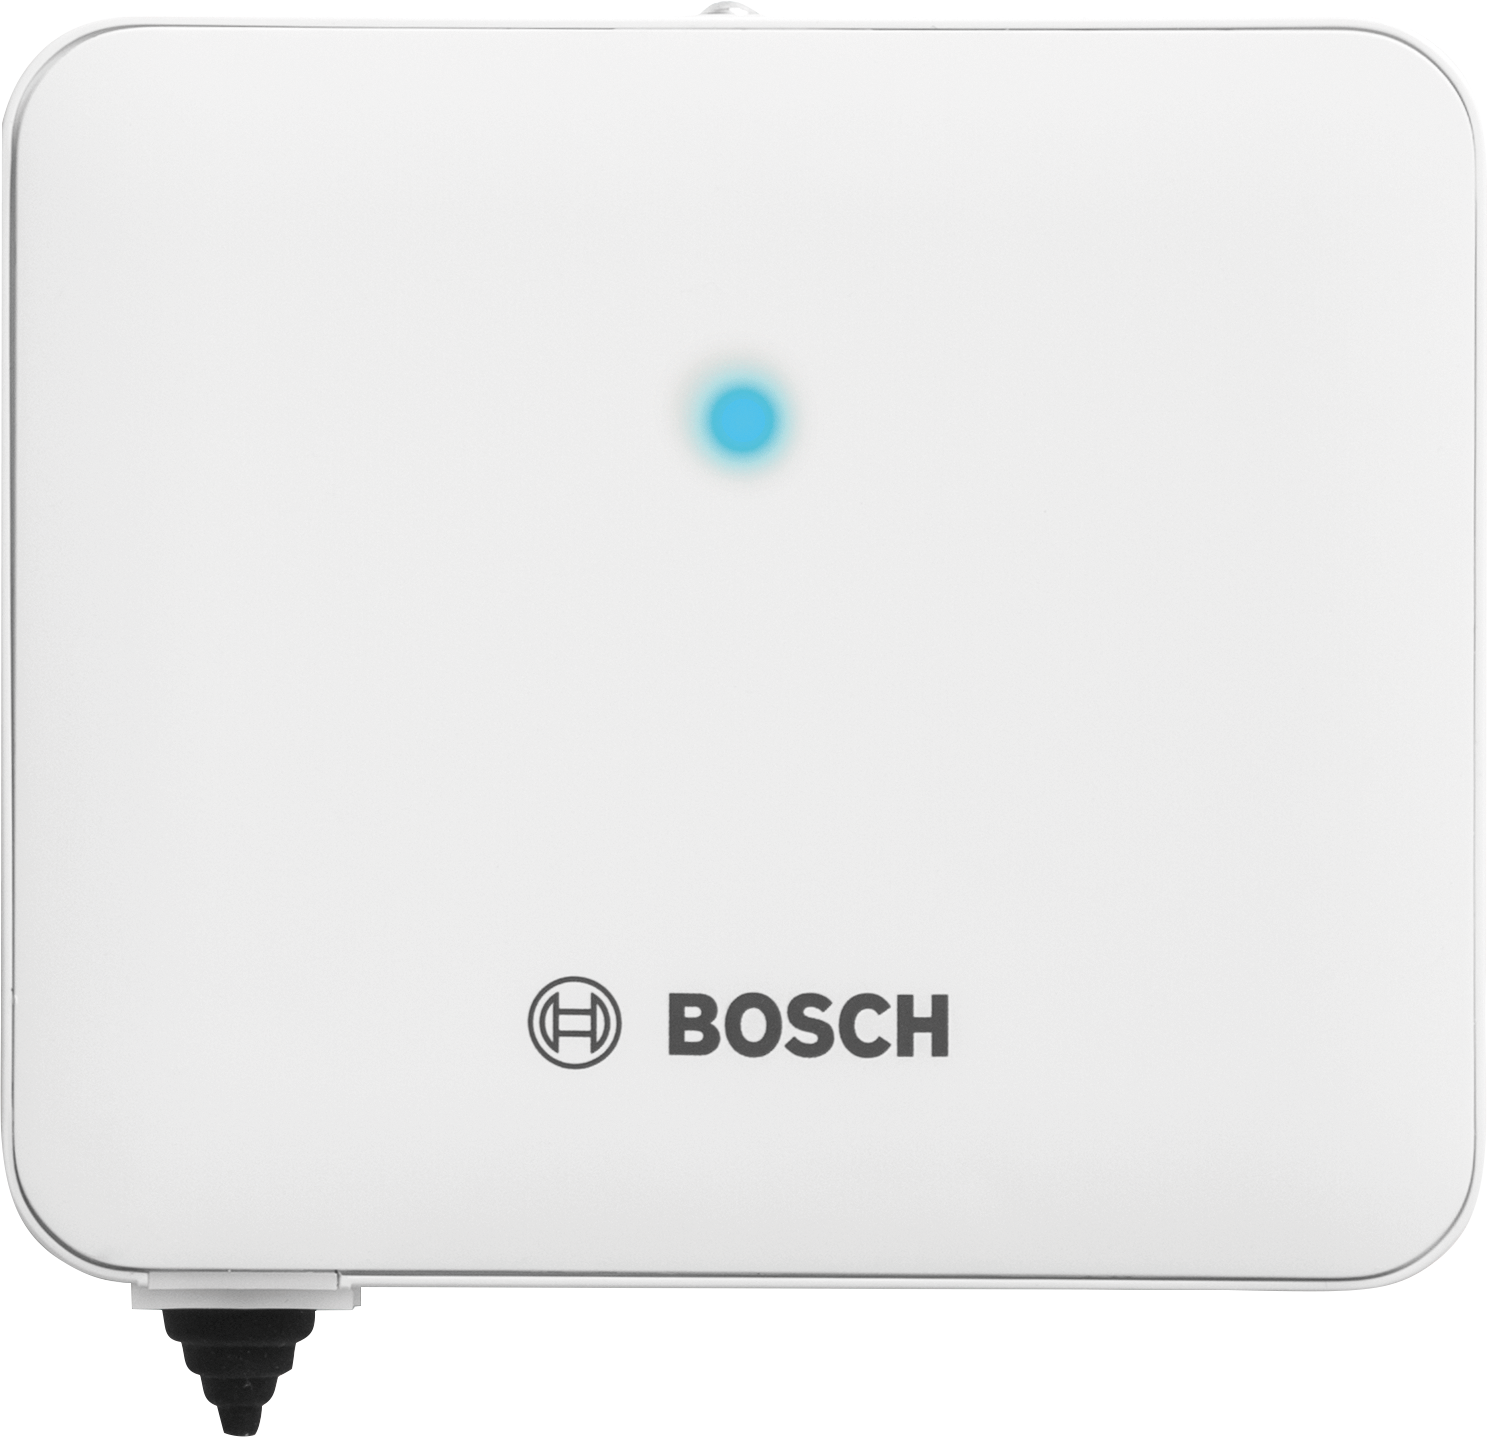 Bosch EasyControl adapter